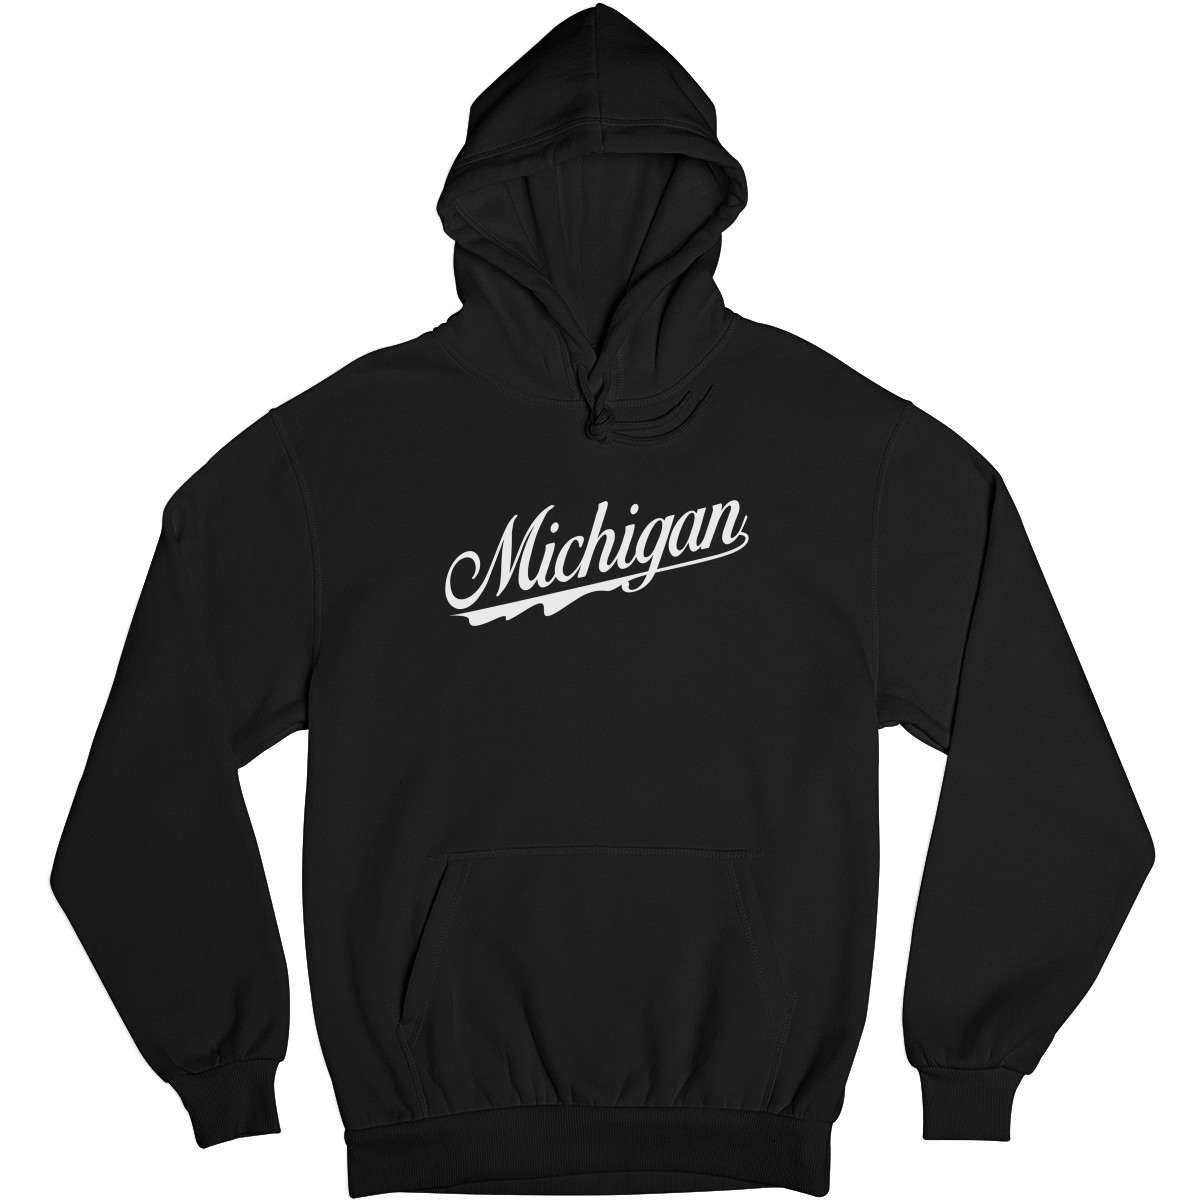 Michigan Unisex Hoodie | Black